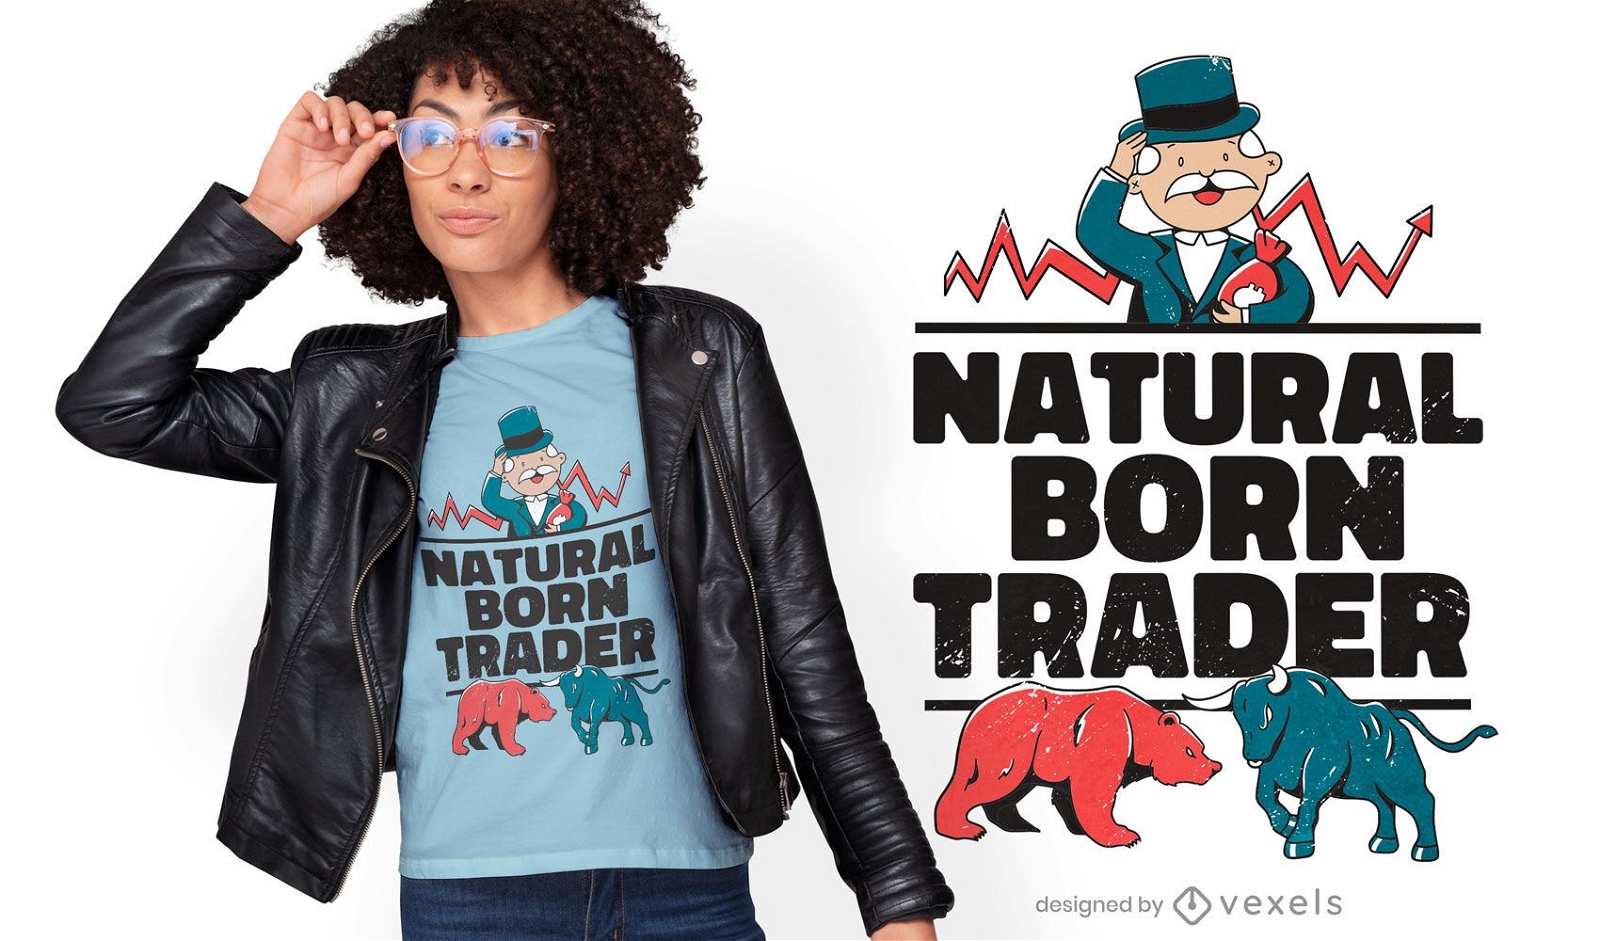 Natural born trader t-shirt design